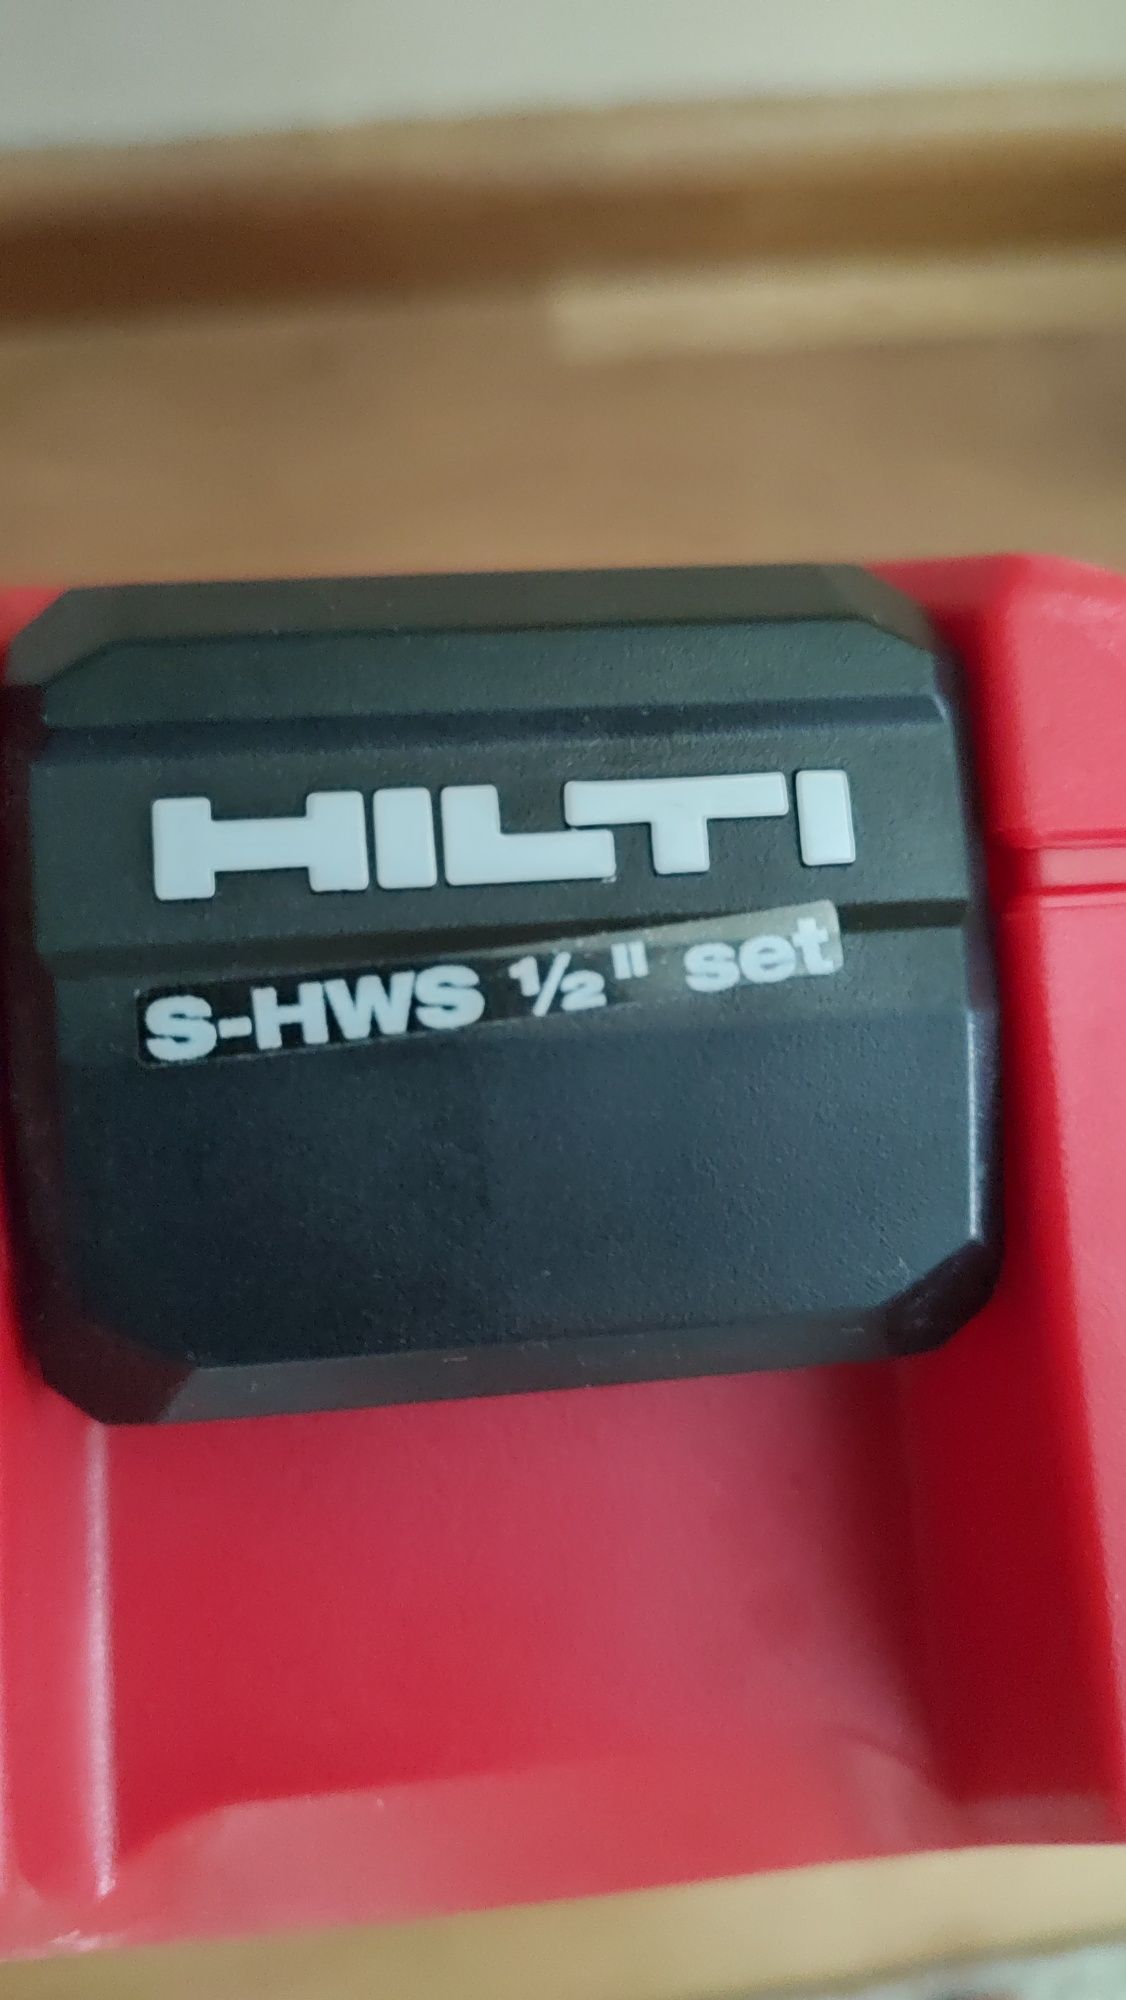 Klucze HILTI S-HWS 1/2" set